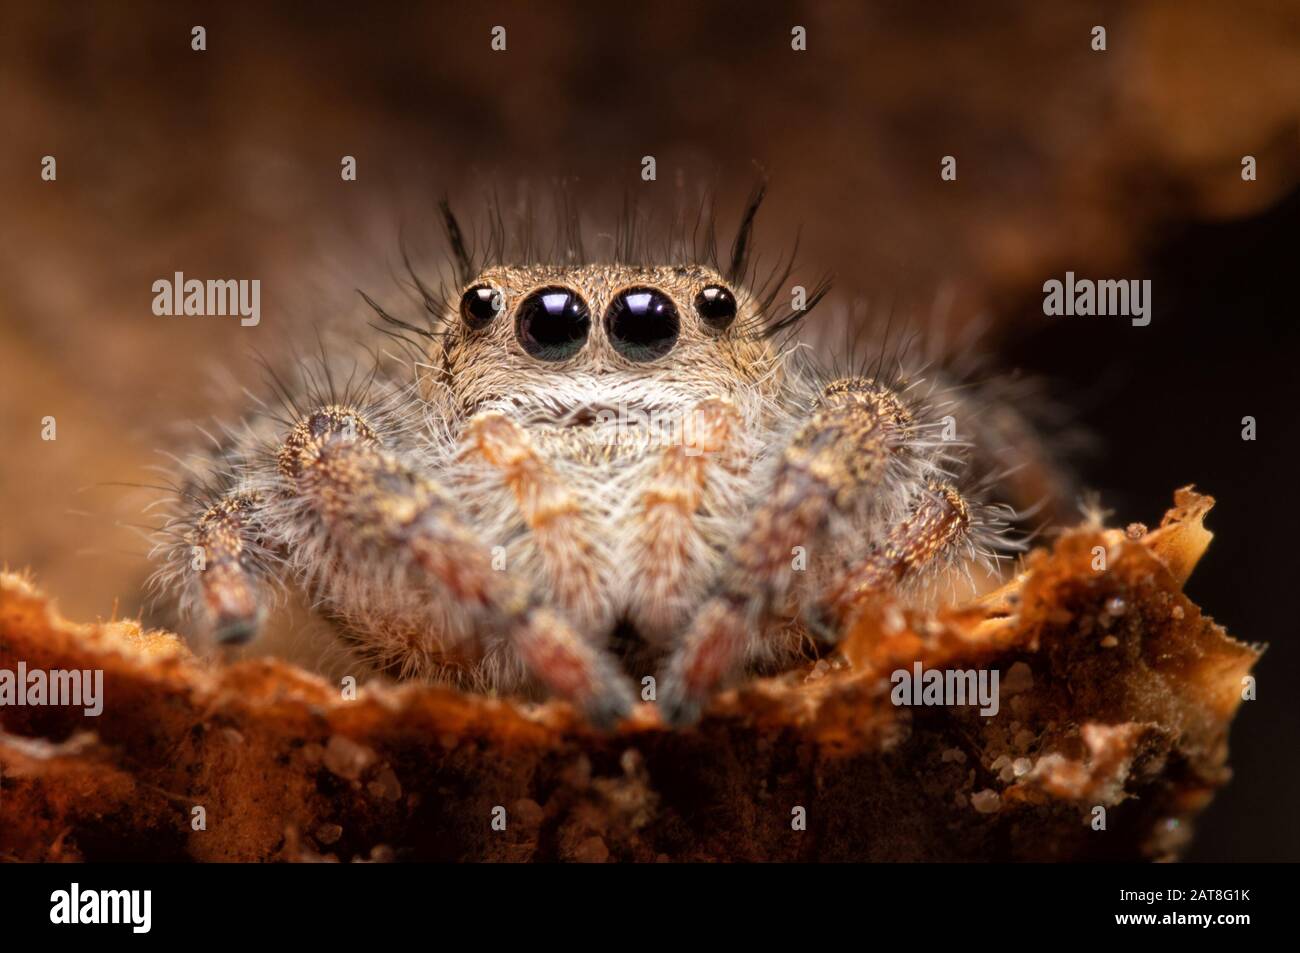 Beautiful Phidippus princeps jumping spider sitting inside an acorn cap Stock Photo